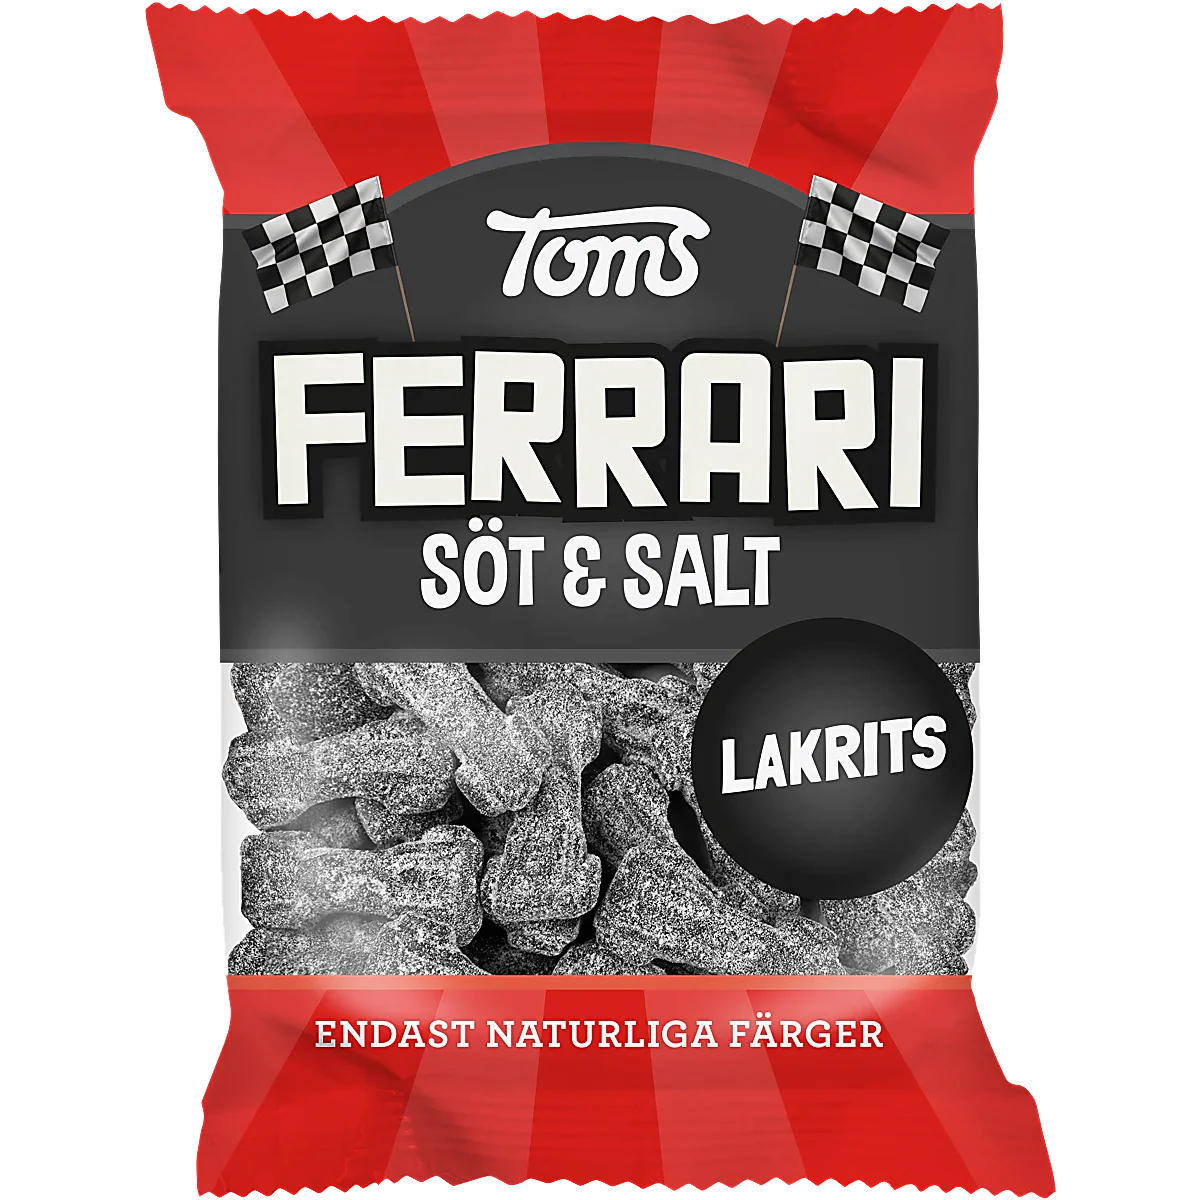 Toms Ferrari dulce y salado by Swedish Candy Store